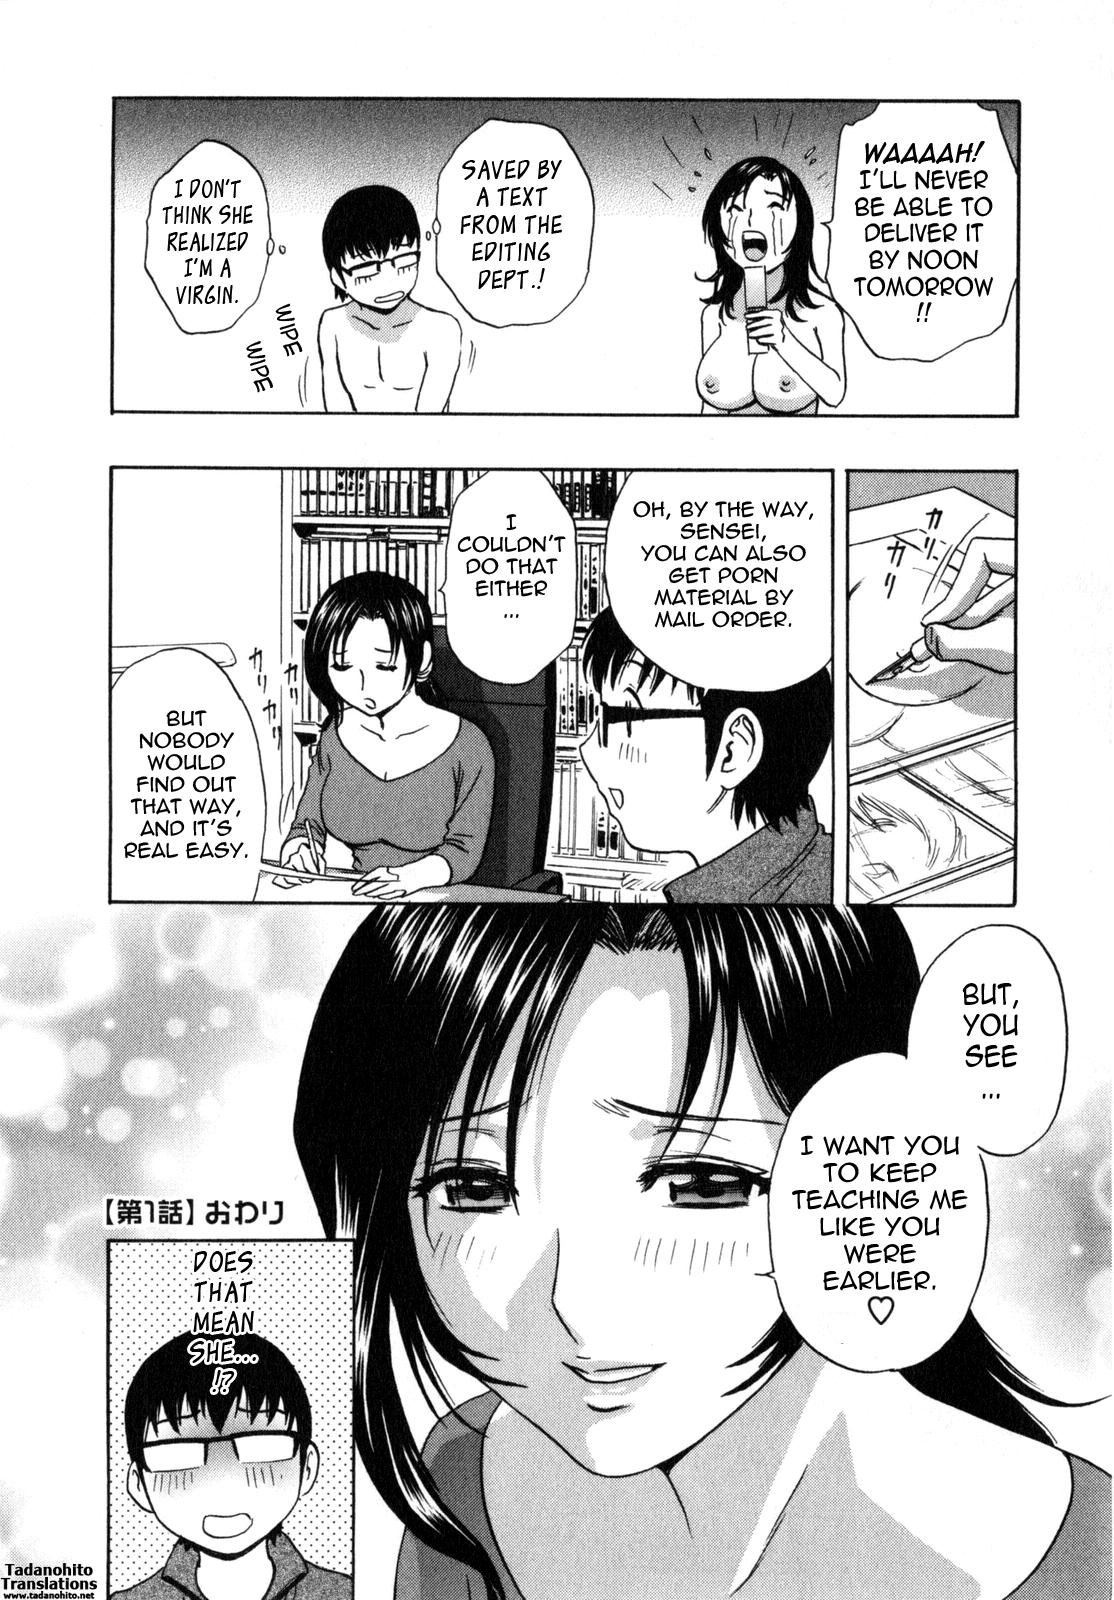 [Hidemaru] Life with Married Women Just Like a Manga 1 - Ch. 1-9 [English] {Tadanohito} 24